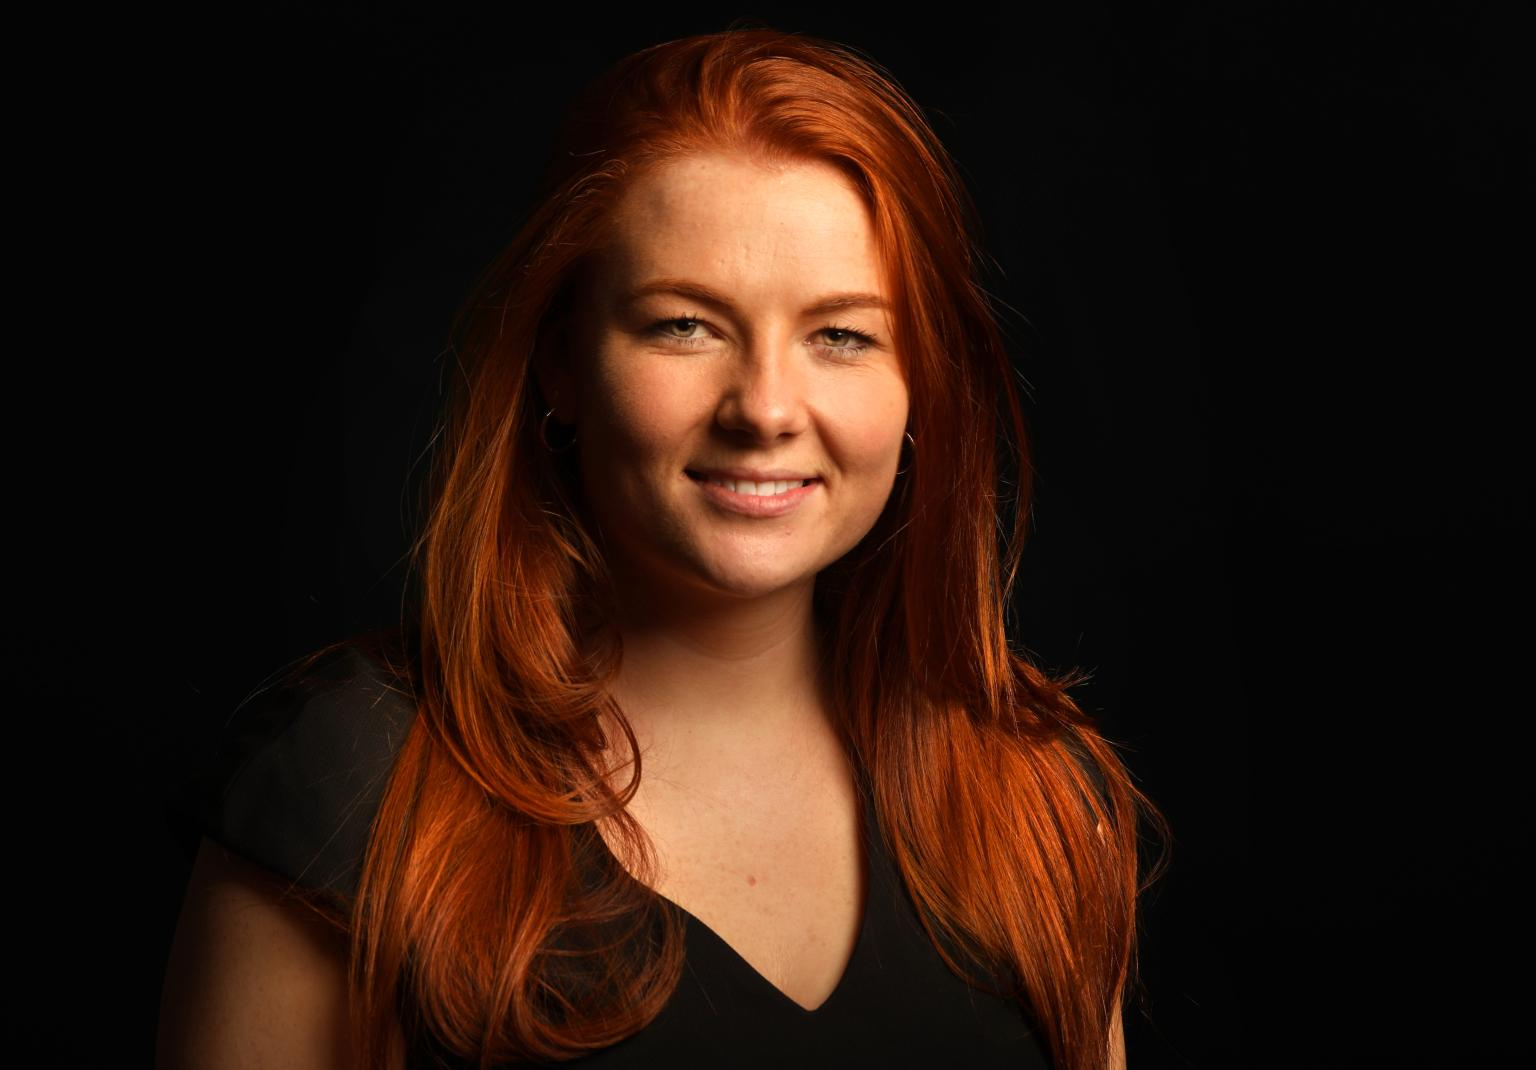 Profile image of Pippa Heron, graduate MSc Real Estate, wearing black top with red hair